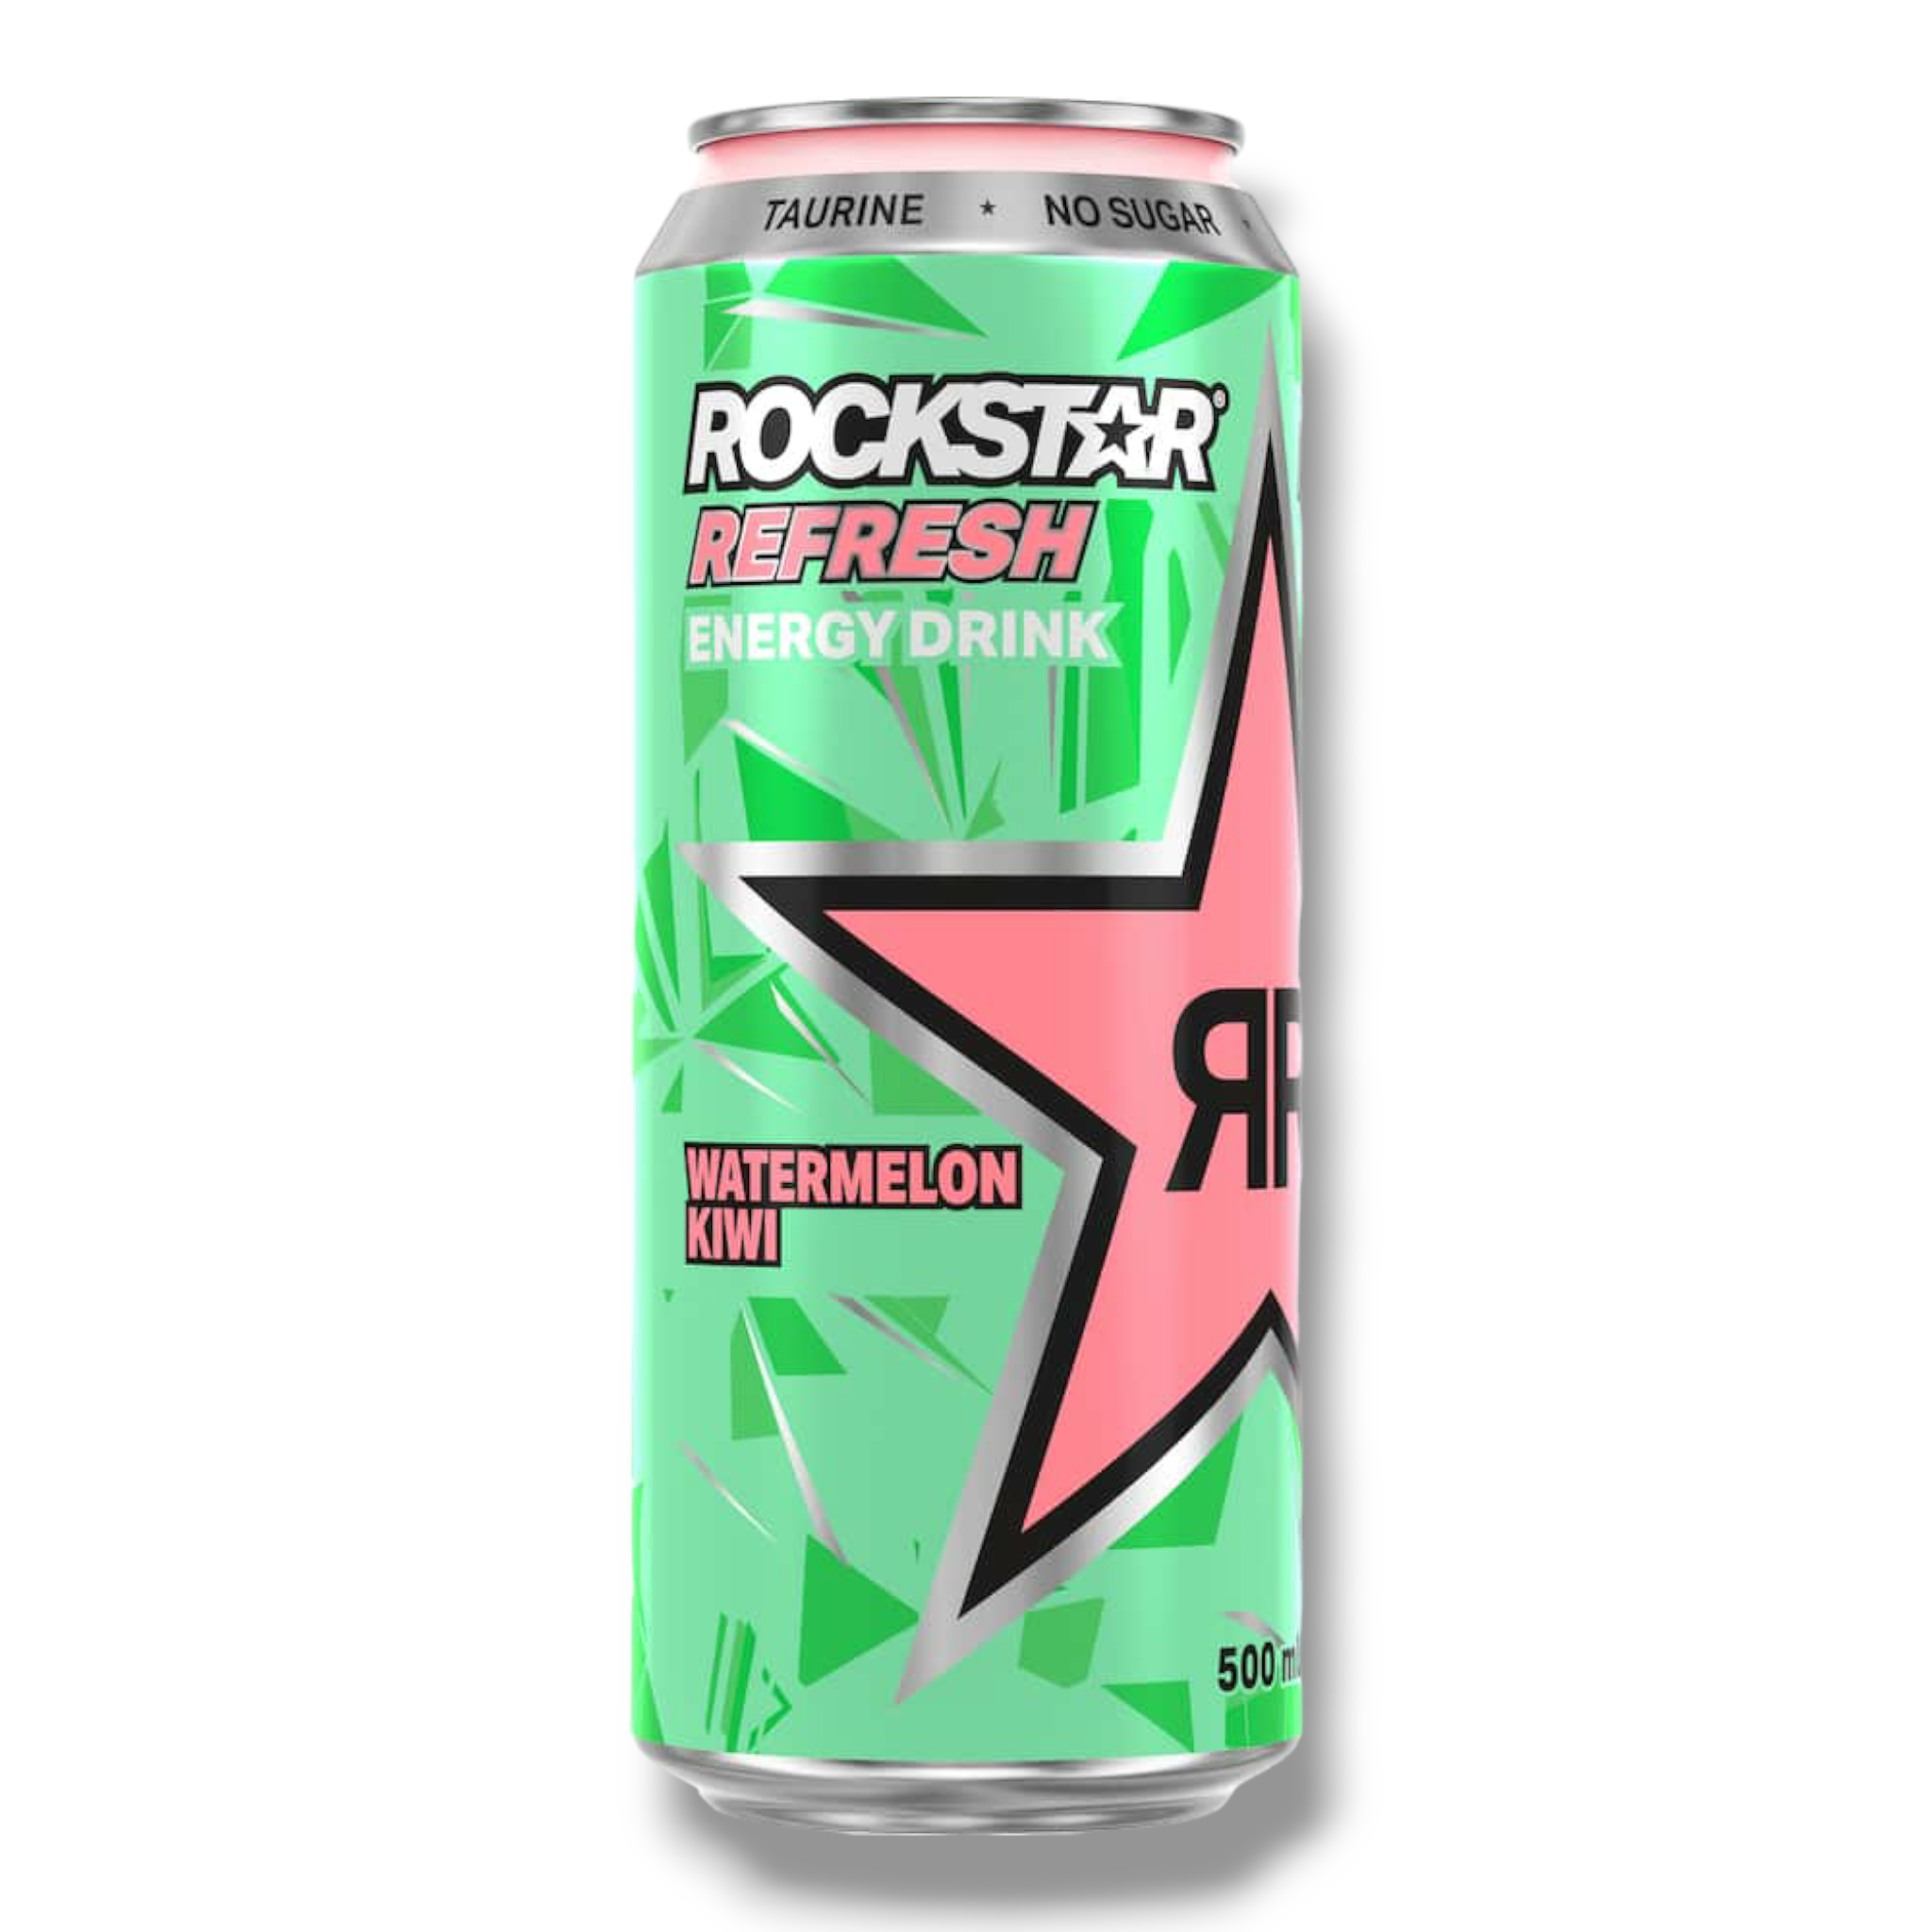 Rockstar Refresh Energy Drink - Watermelon Kiwi